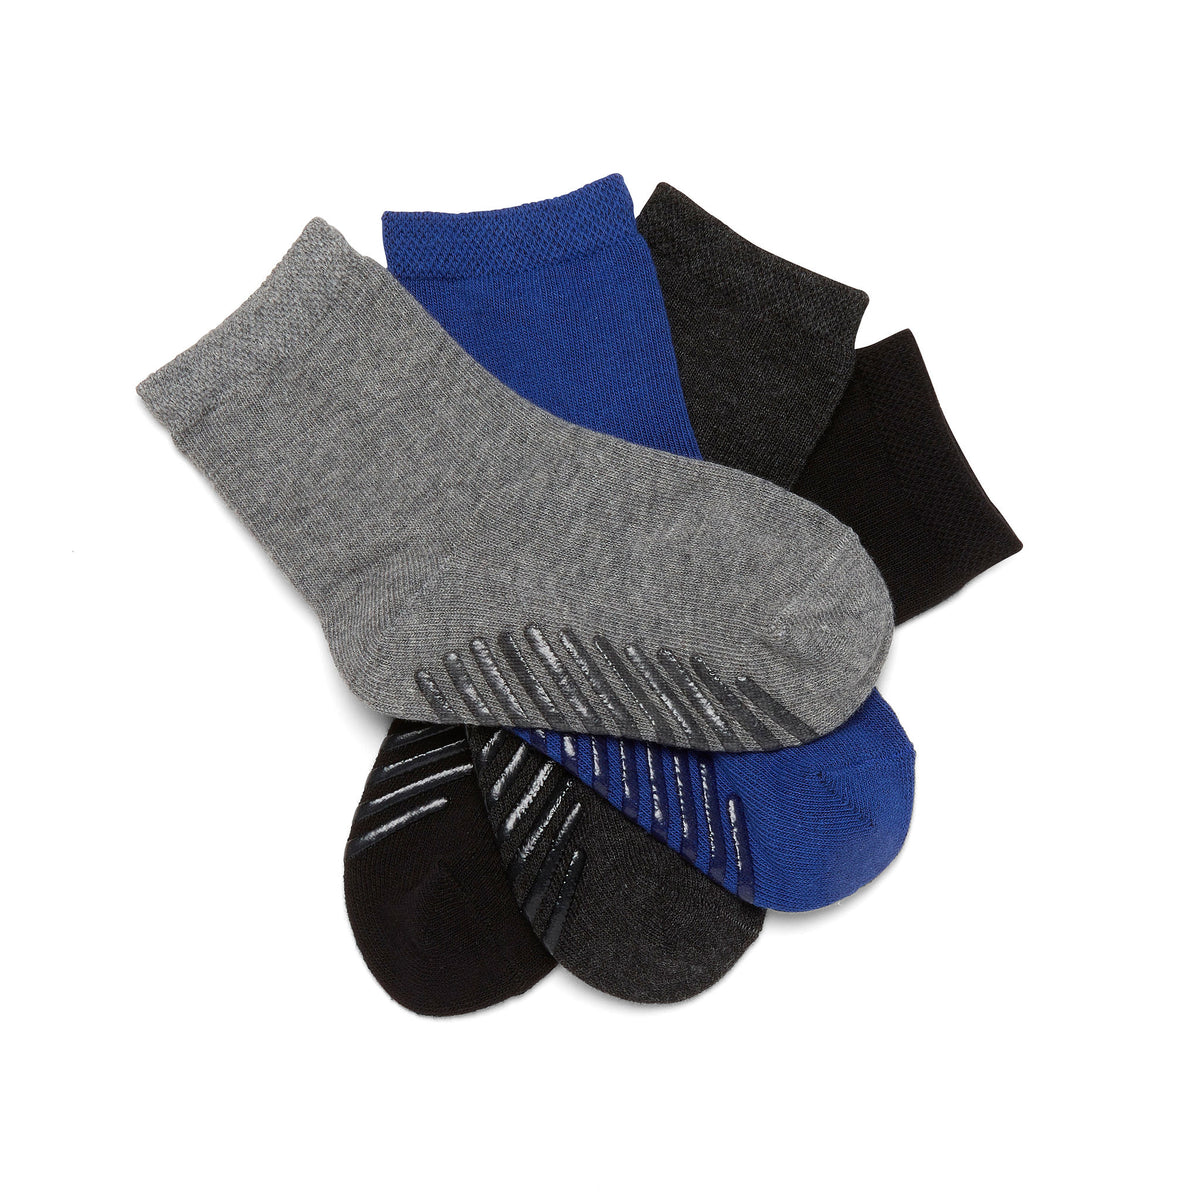 Blue/Black/Grey Grip Socks for Toddlers &amp; Kids - 4 pairs - Gripjoy Socks